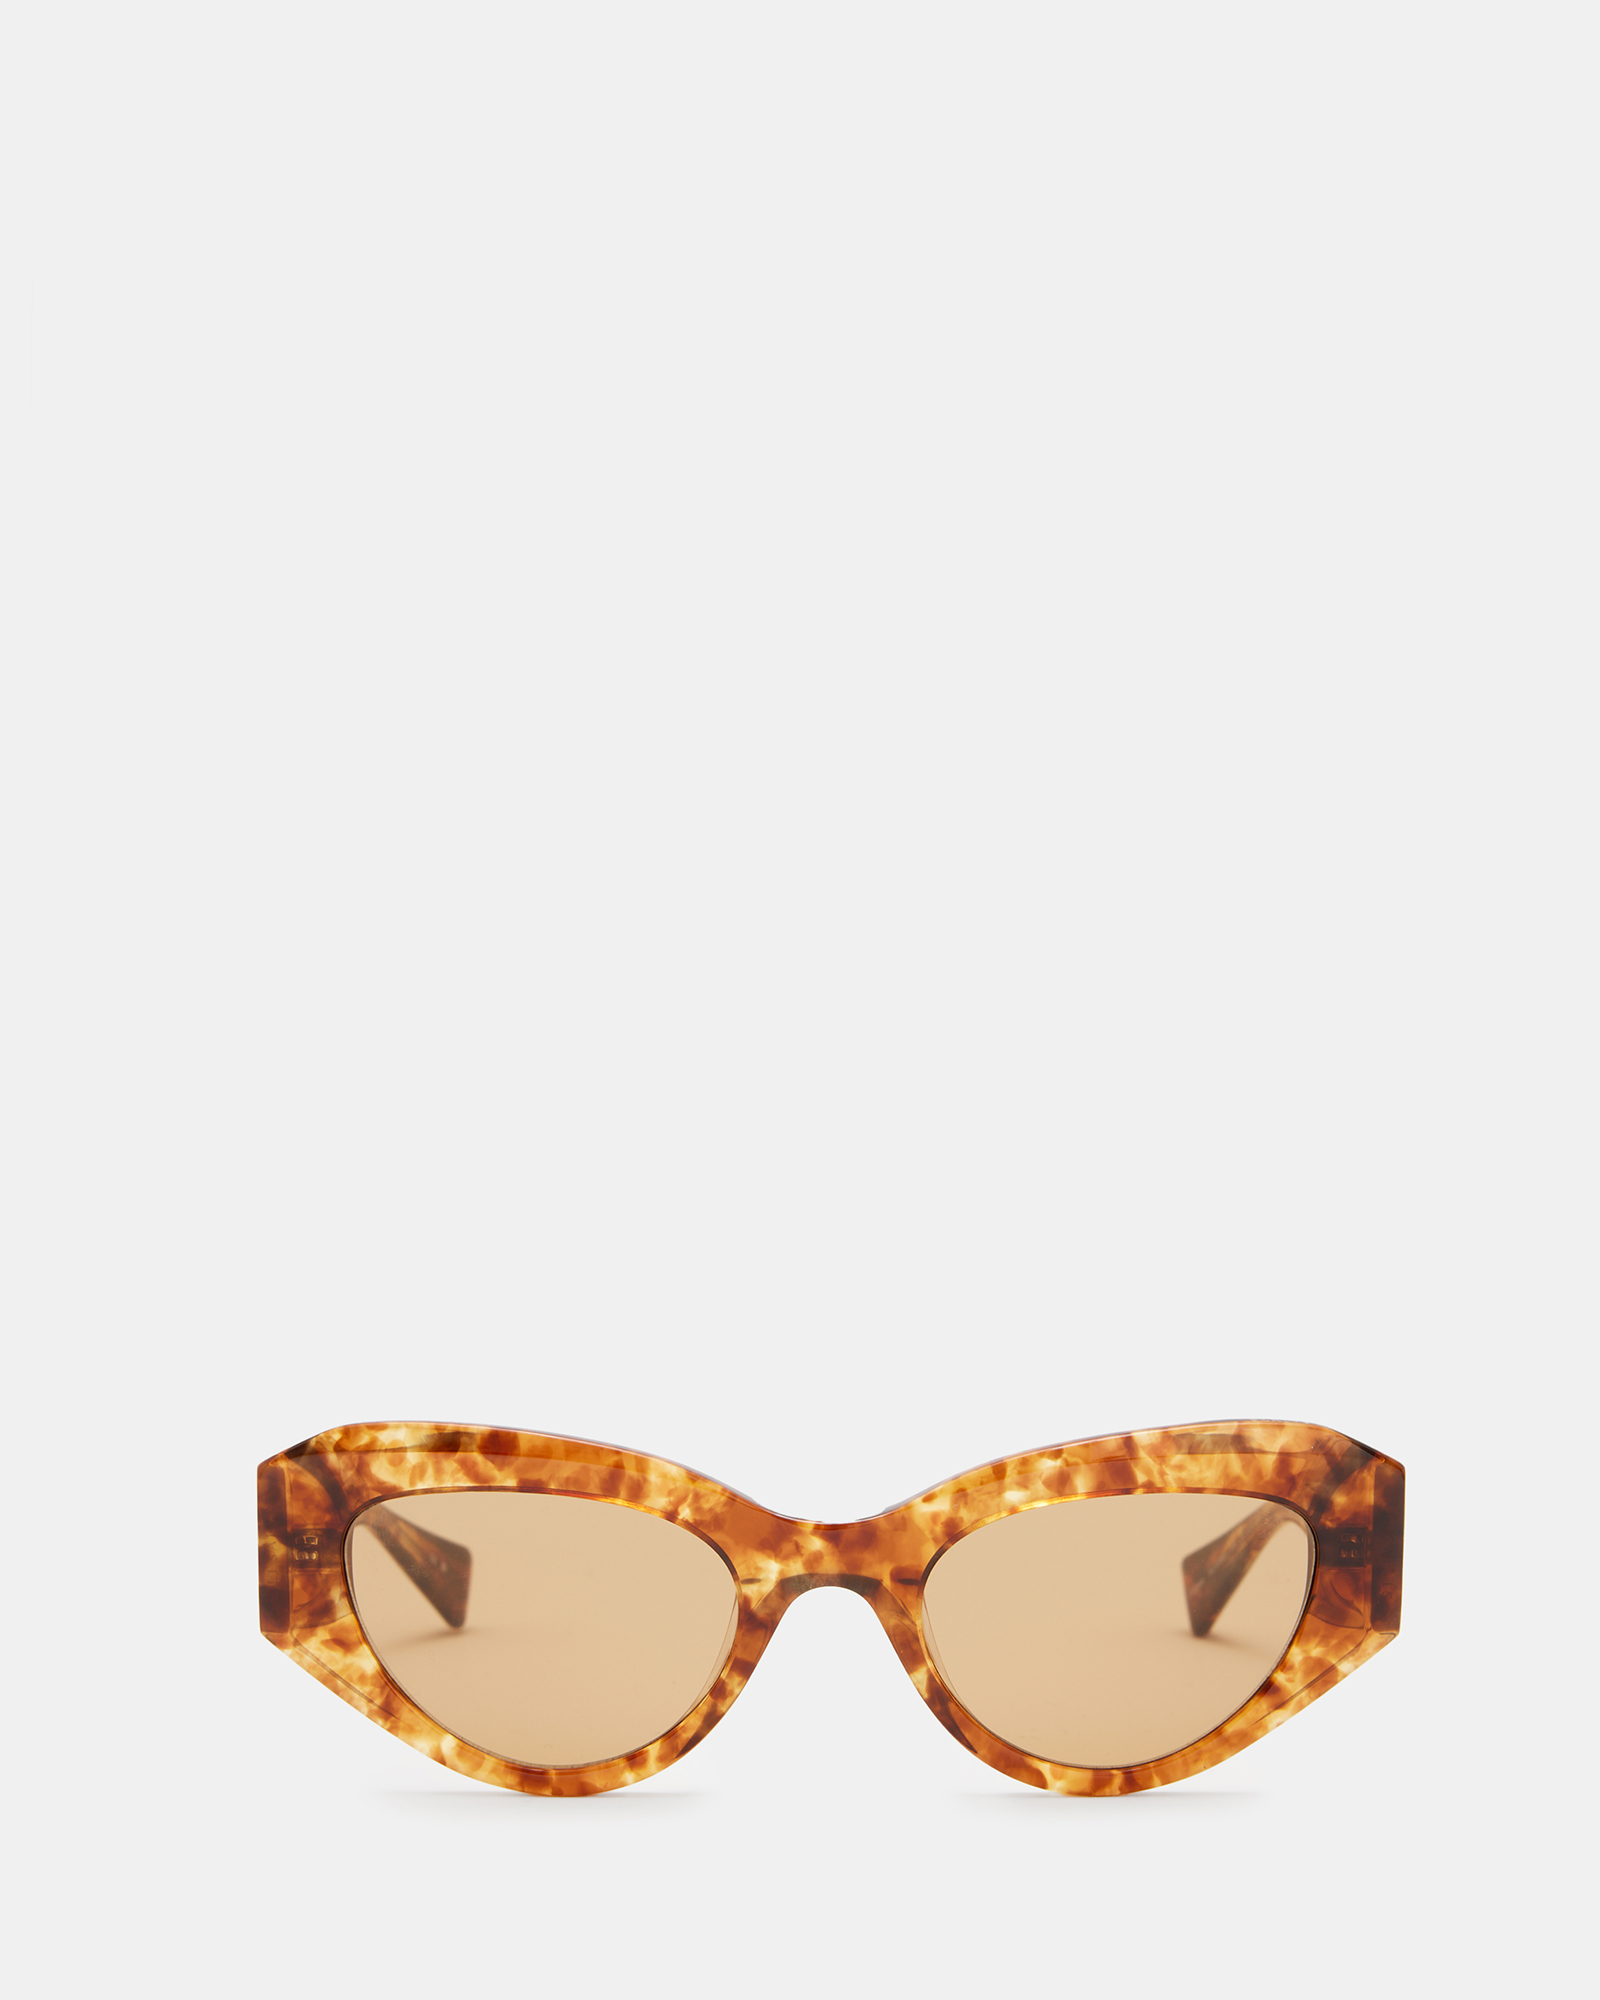 AllSaints Calypso Bevelled Cat Eye Sunglasses,, Brown